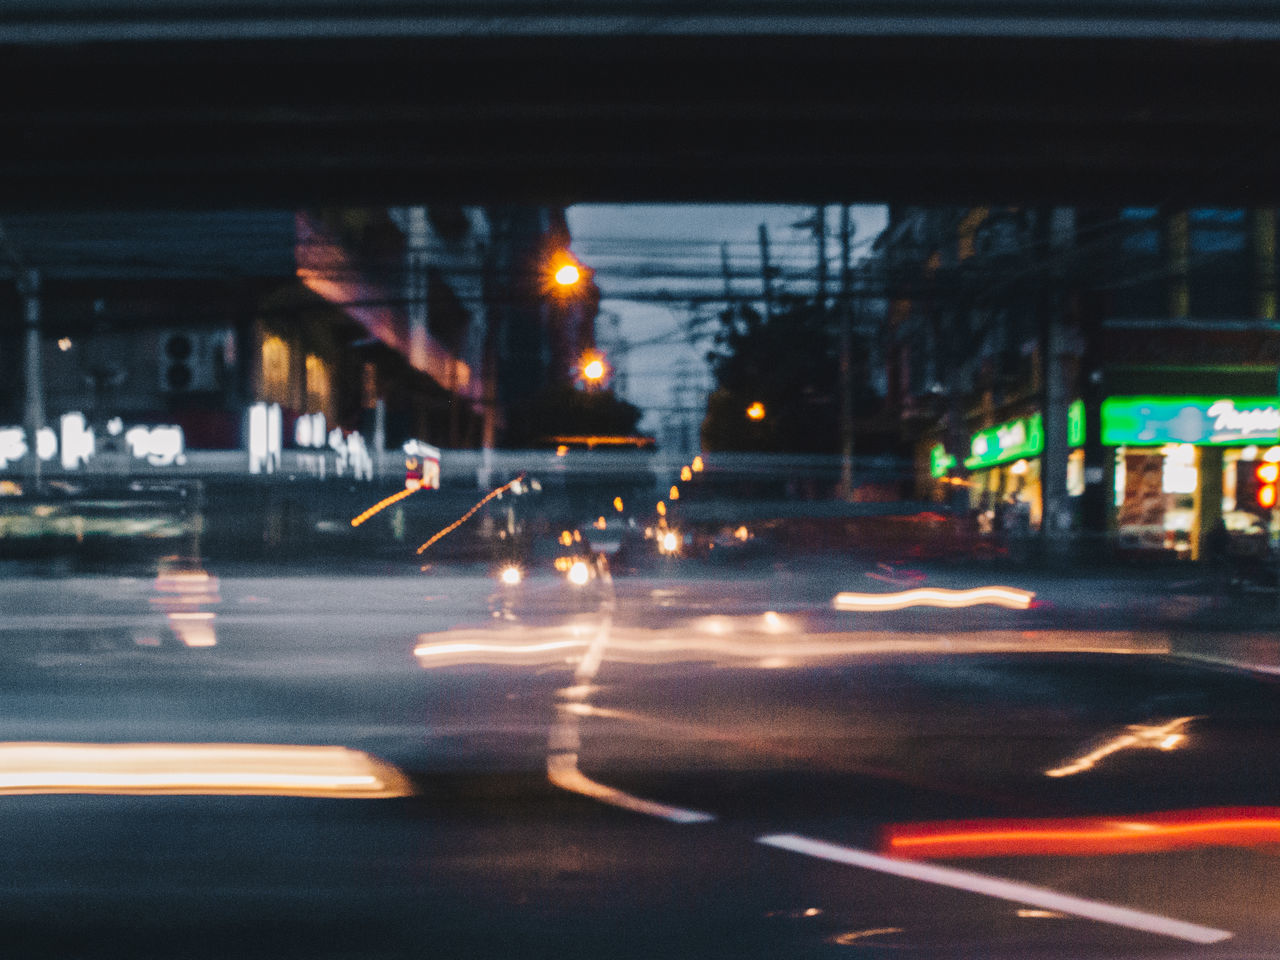 CARS ON ILLUMINATED CITY STREET AT NIGHT